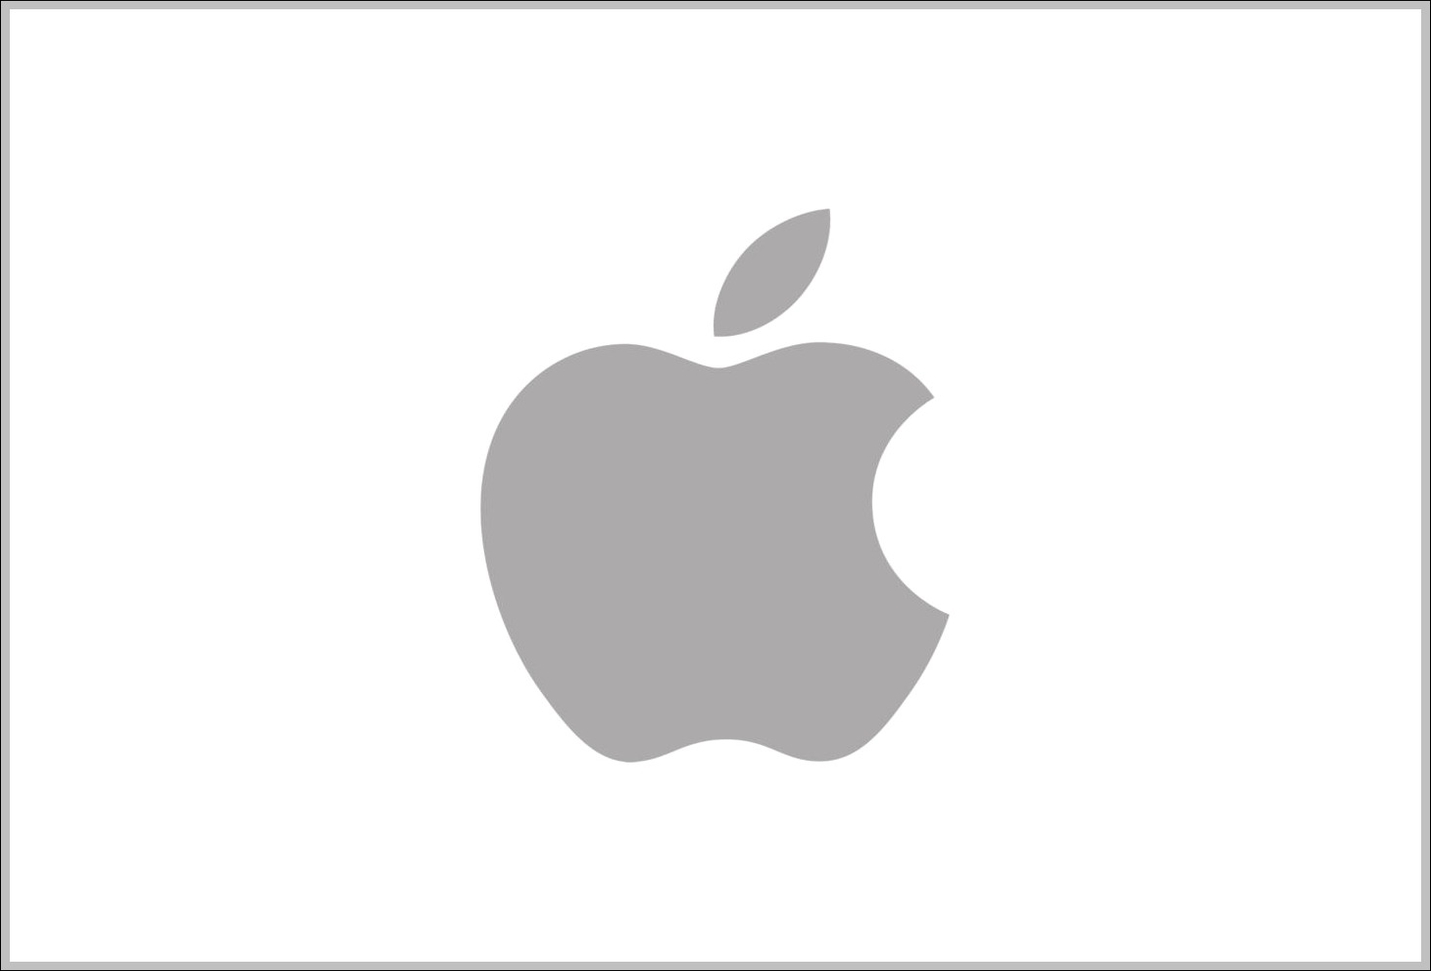 Apple logo grey